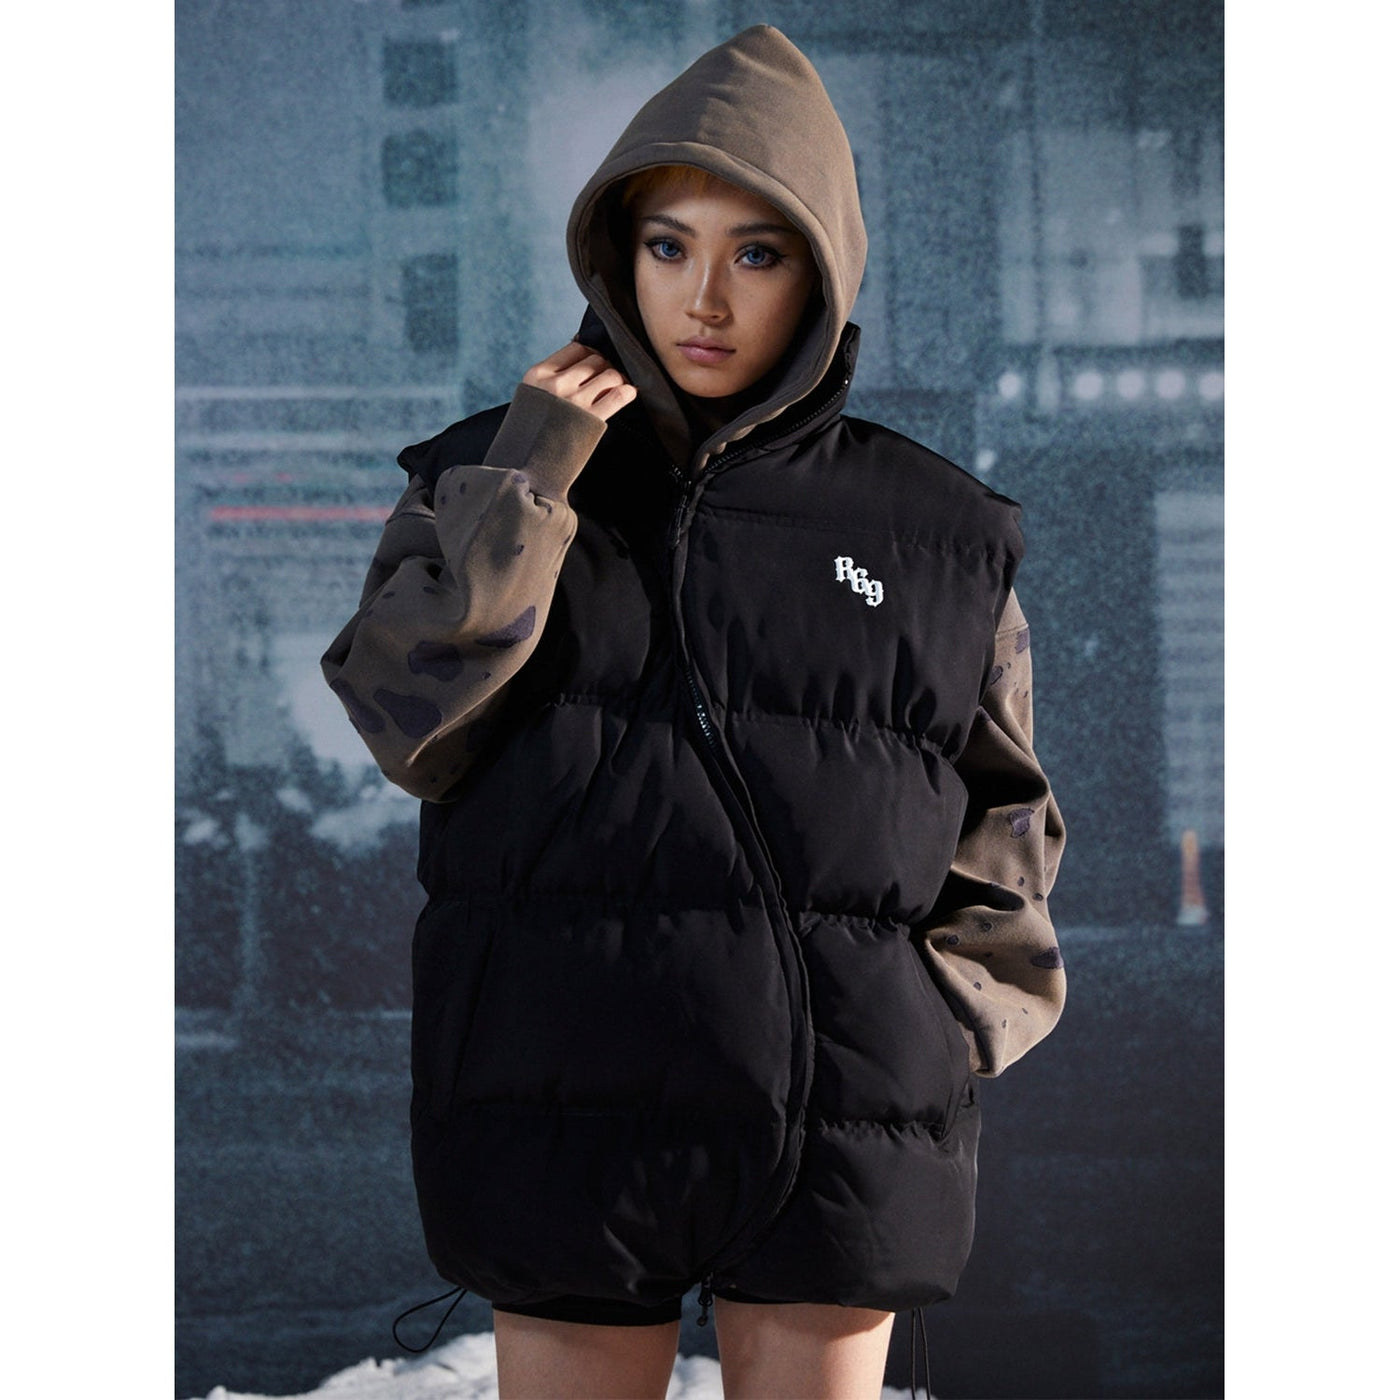 Semicircle Zipper Puffer Vest Korean Street Fashion Vest By R69 Shop Online at OH Vault